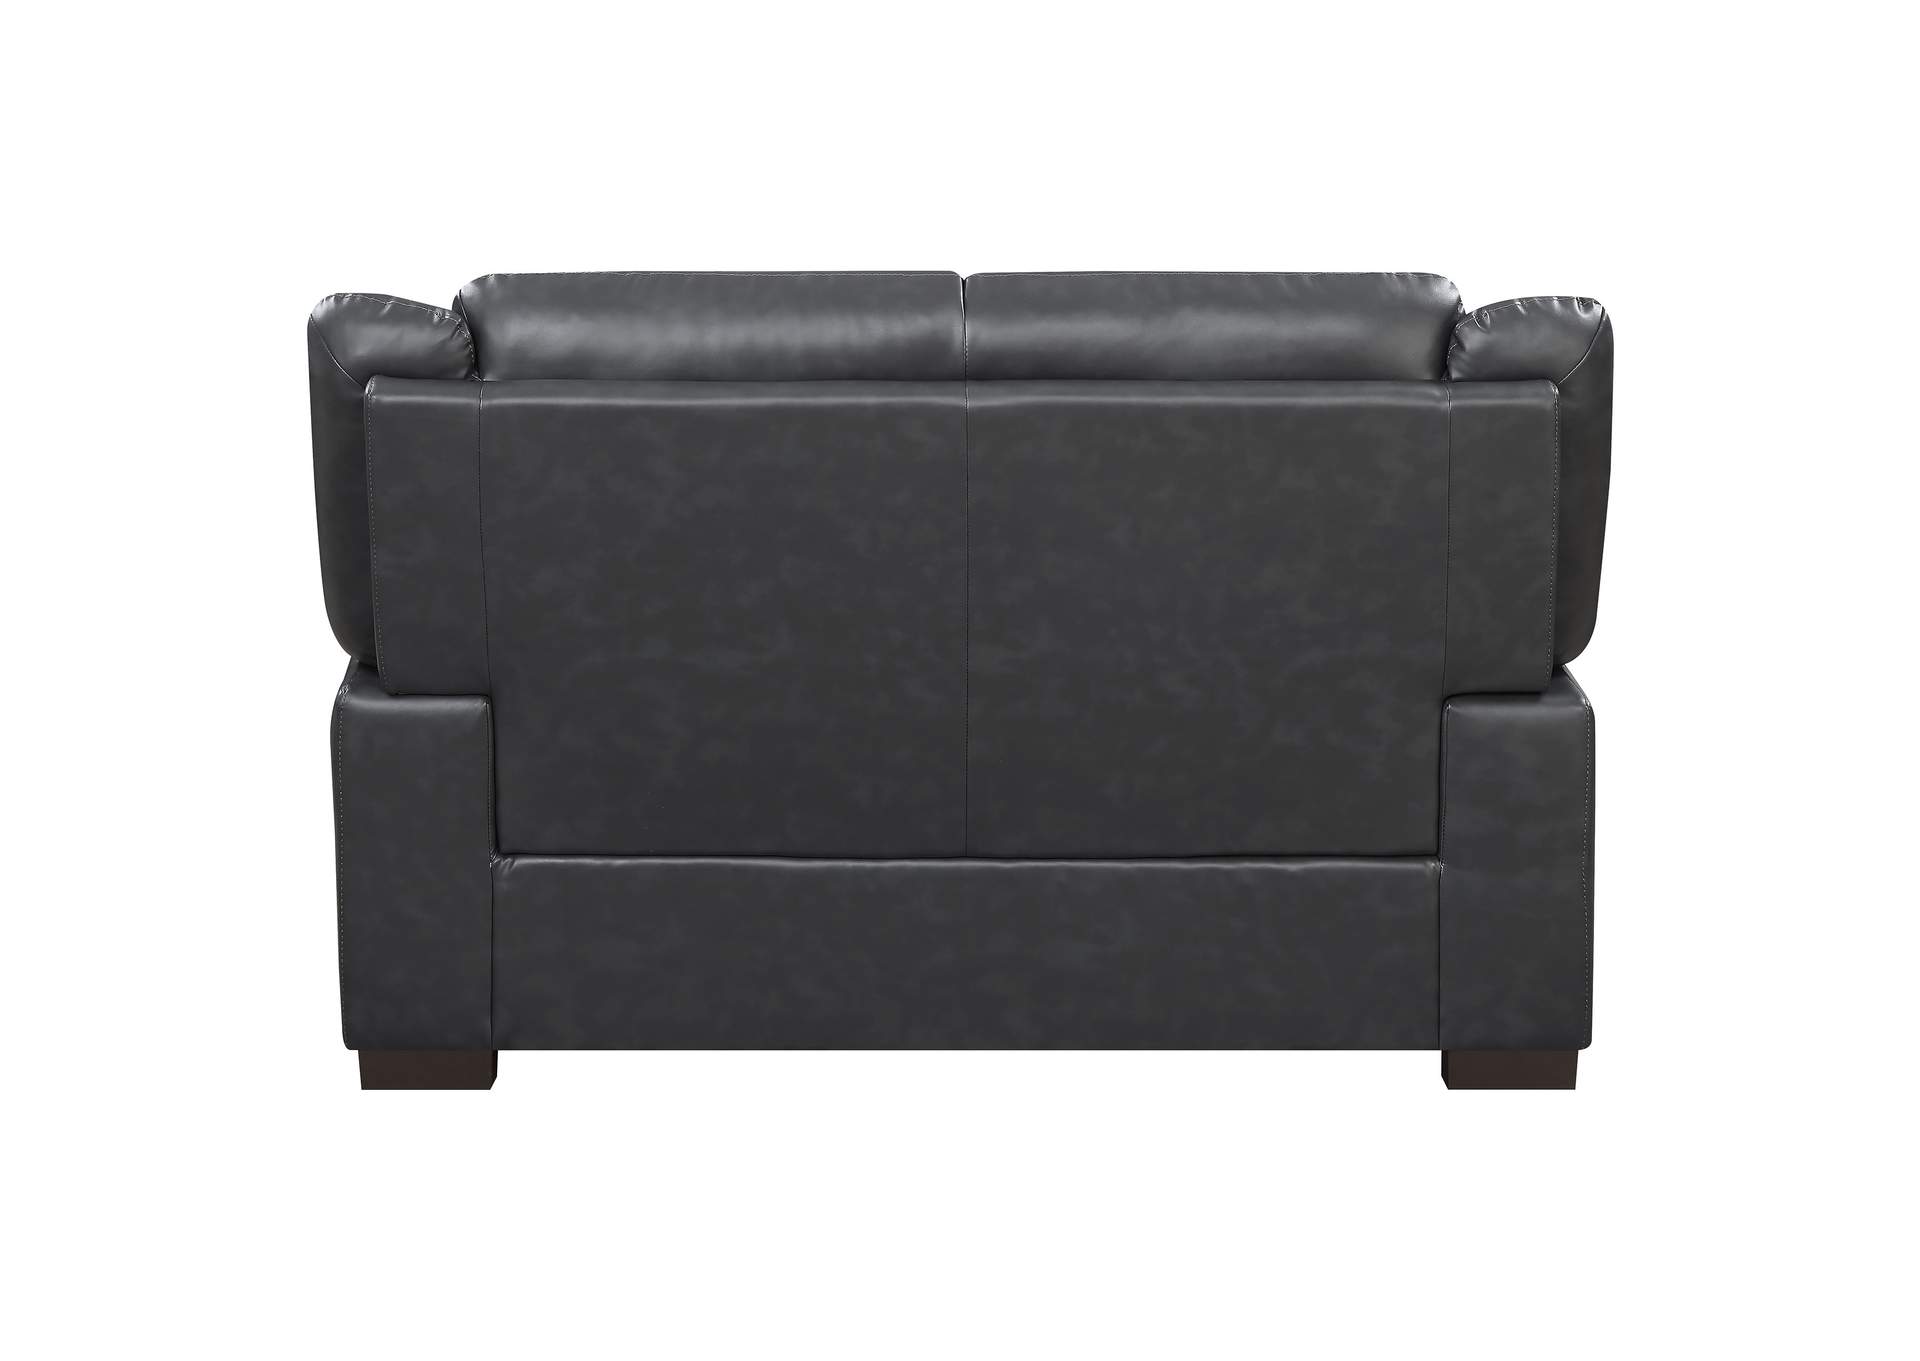 Arabella Pillow Top Upholstered Loveseat Grey,Coaster Furniture